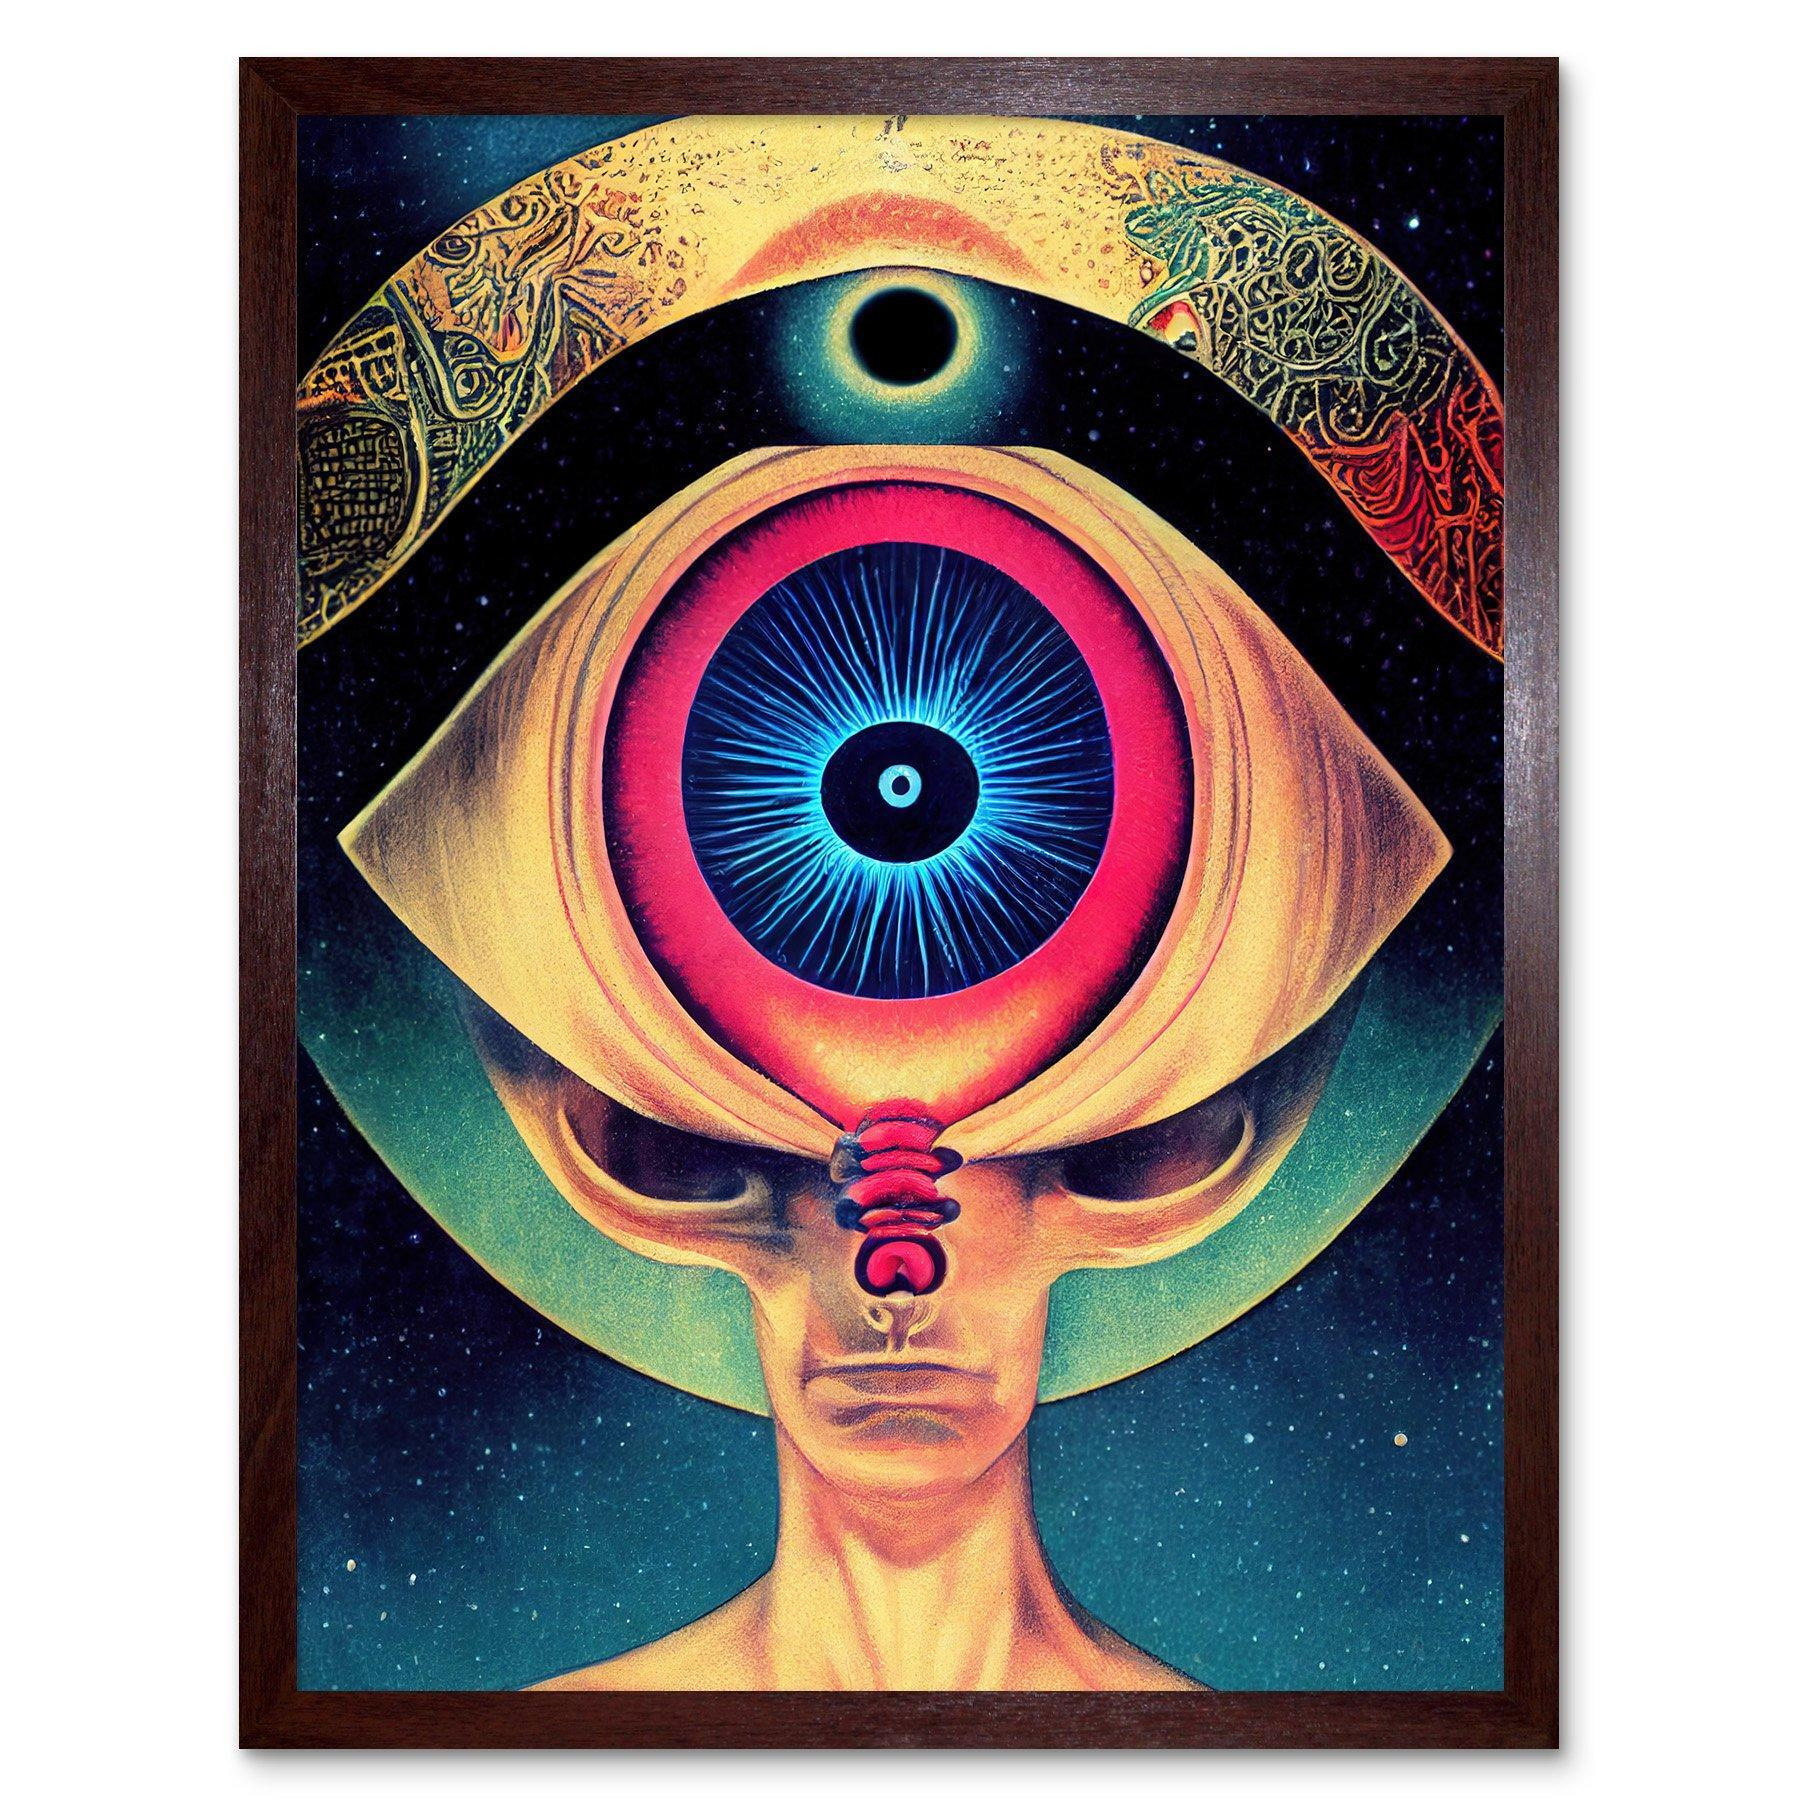 Third Eye Psychic Alien Contact Universe Secrets Sun Eclipse Art Print Framed Poster Wall Decor 12x16 inch - image 1